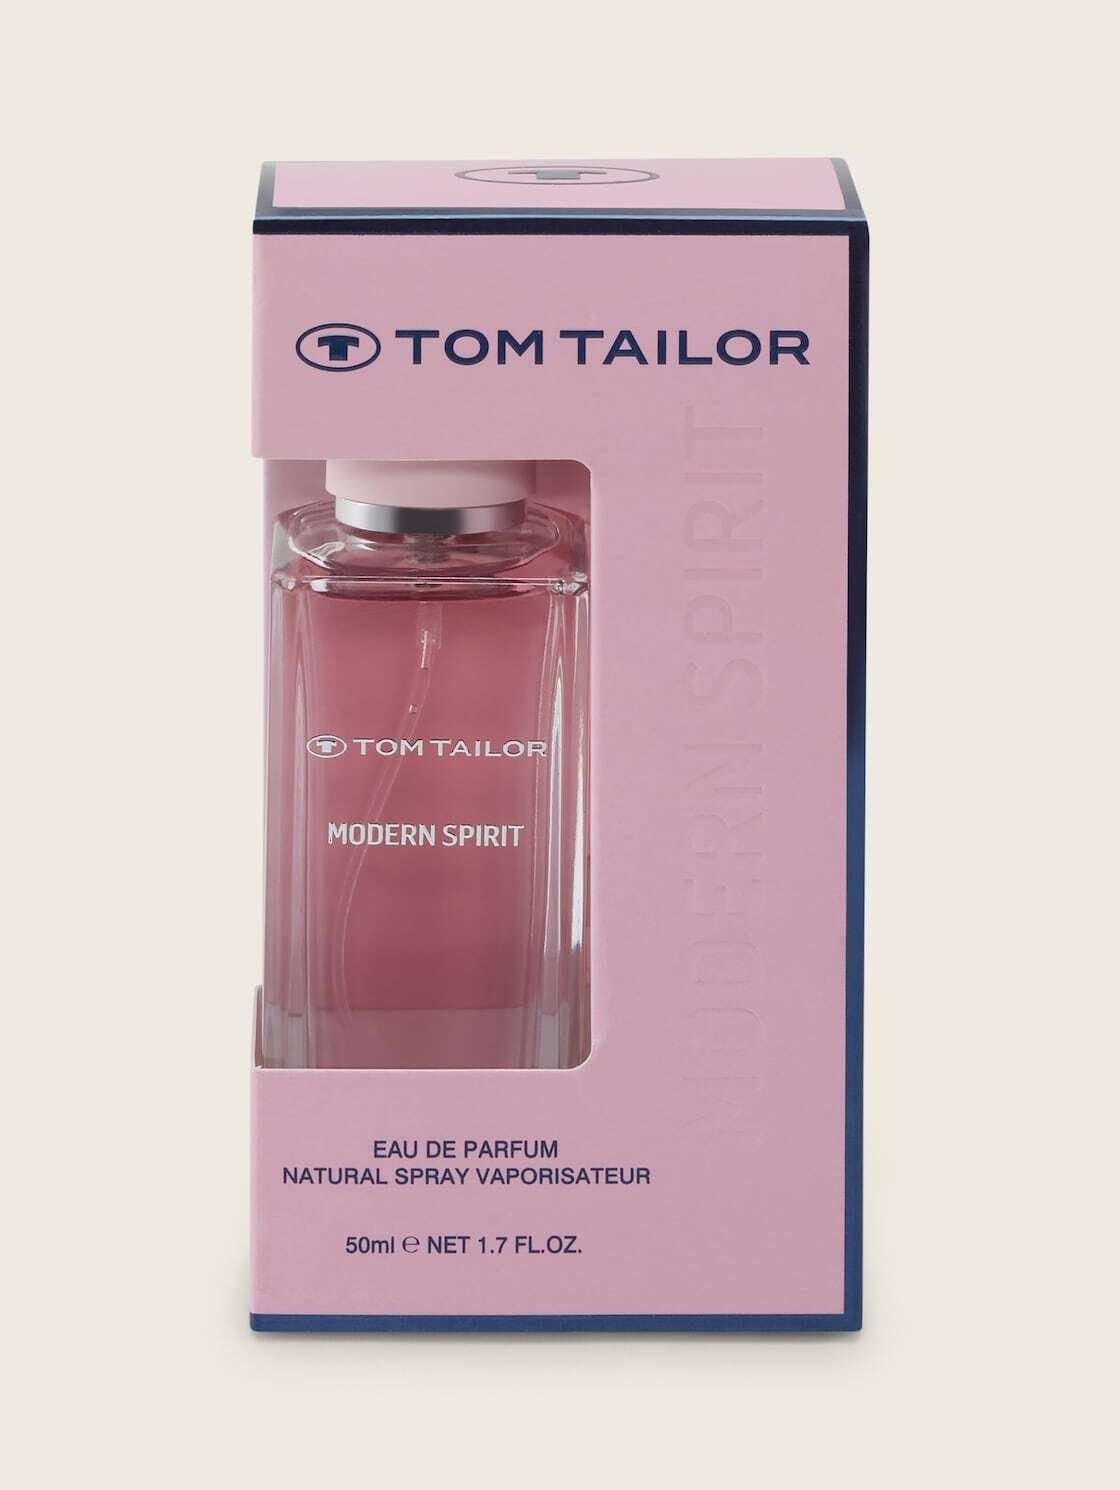 TOM TAILOR for Modern her Parfum Spirit Eau 50ml de